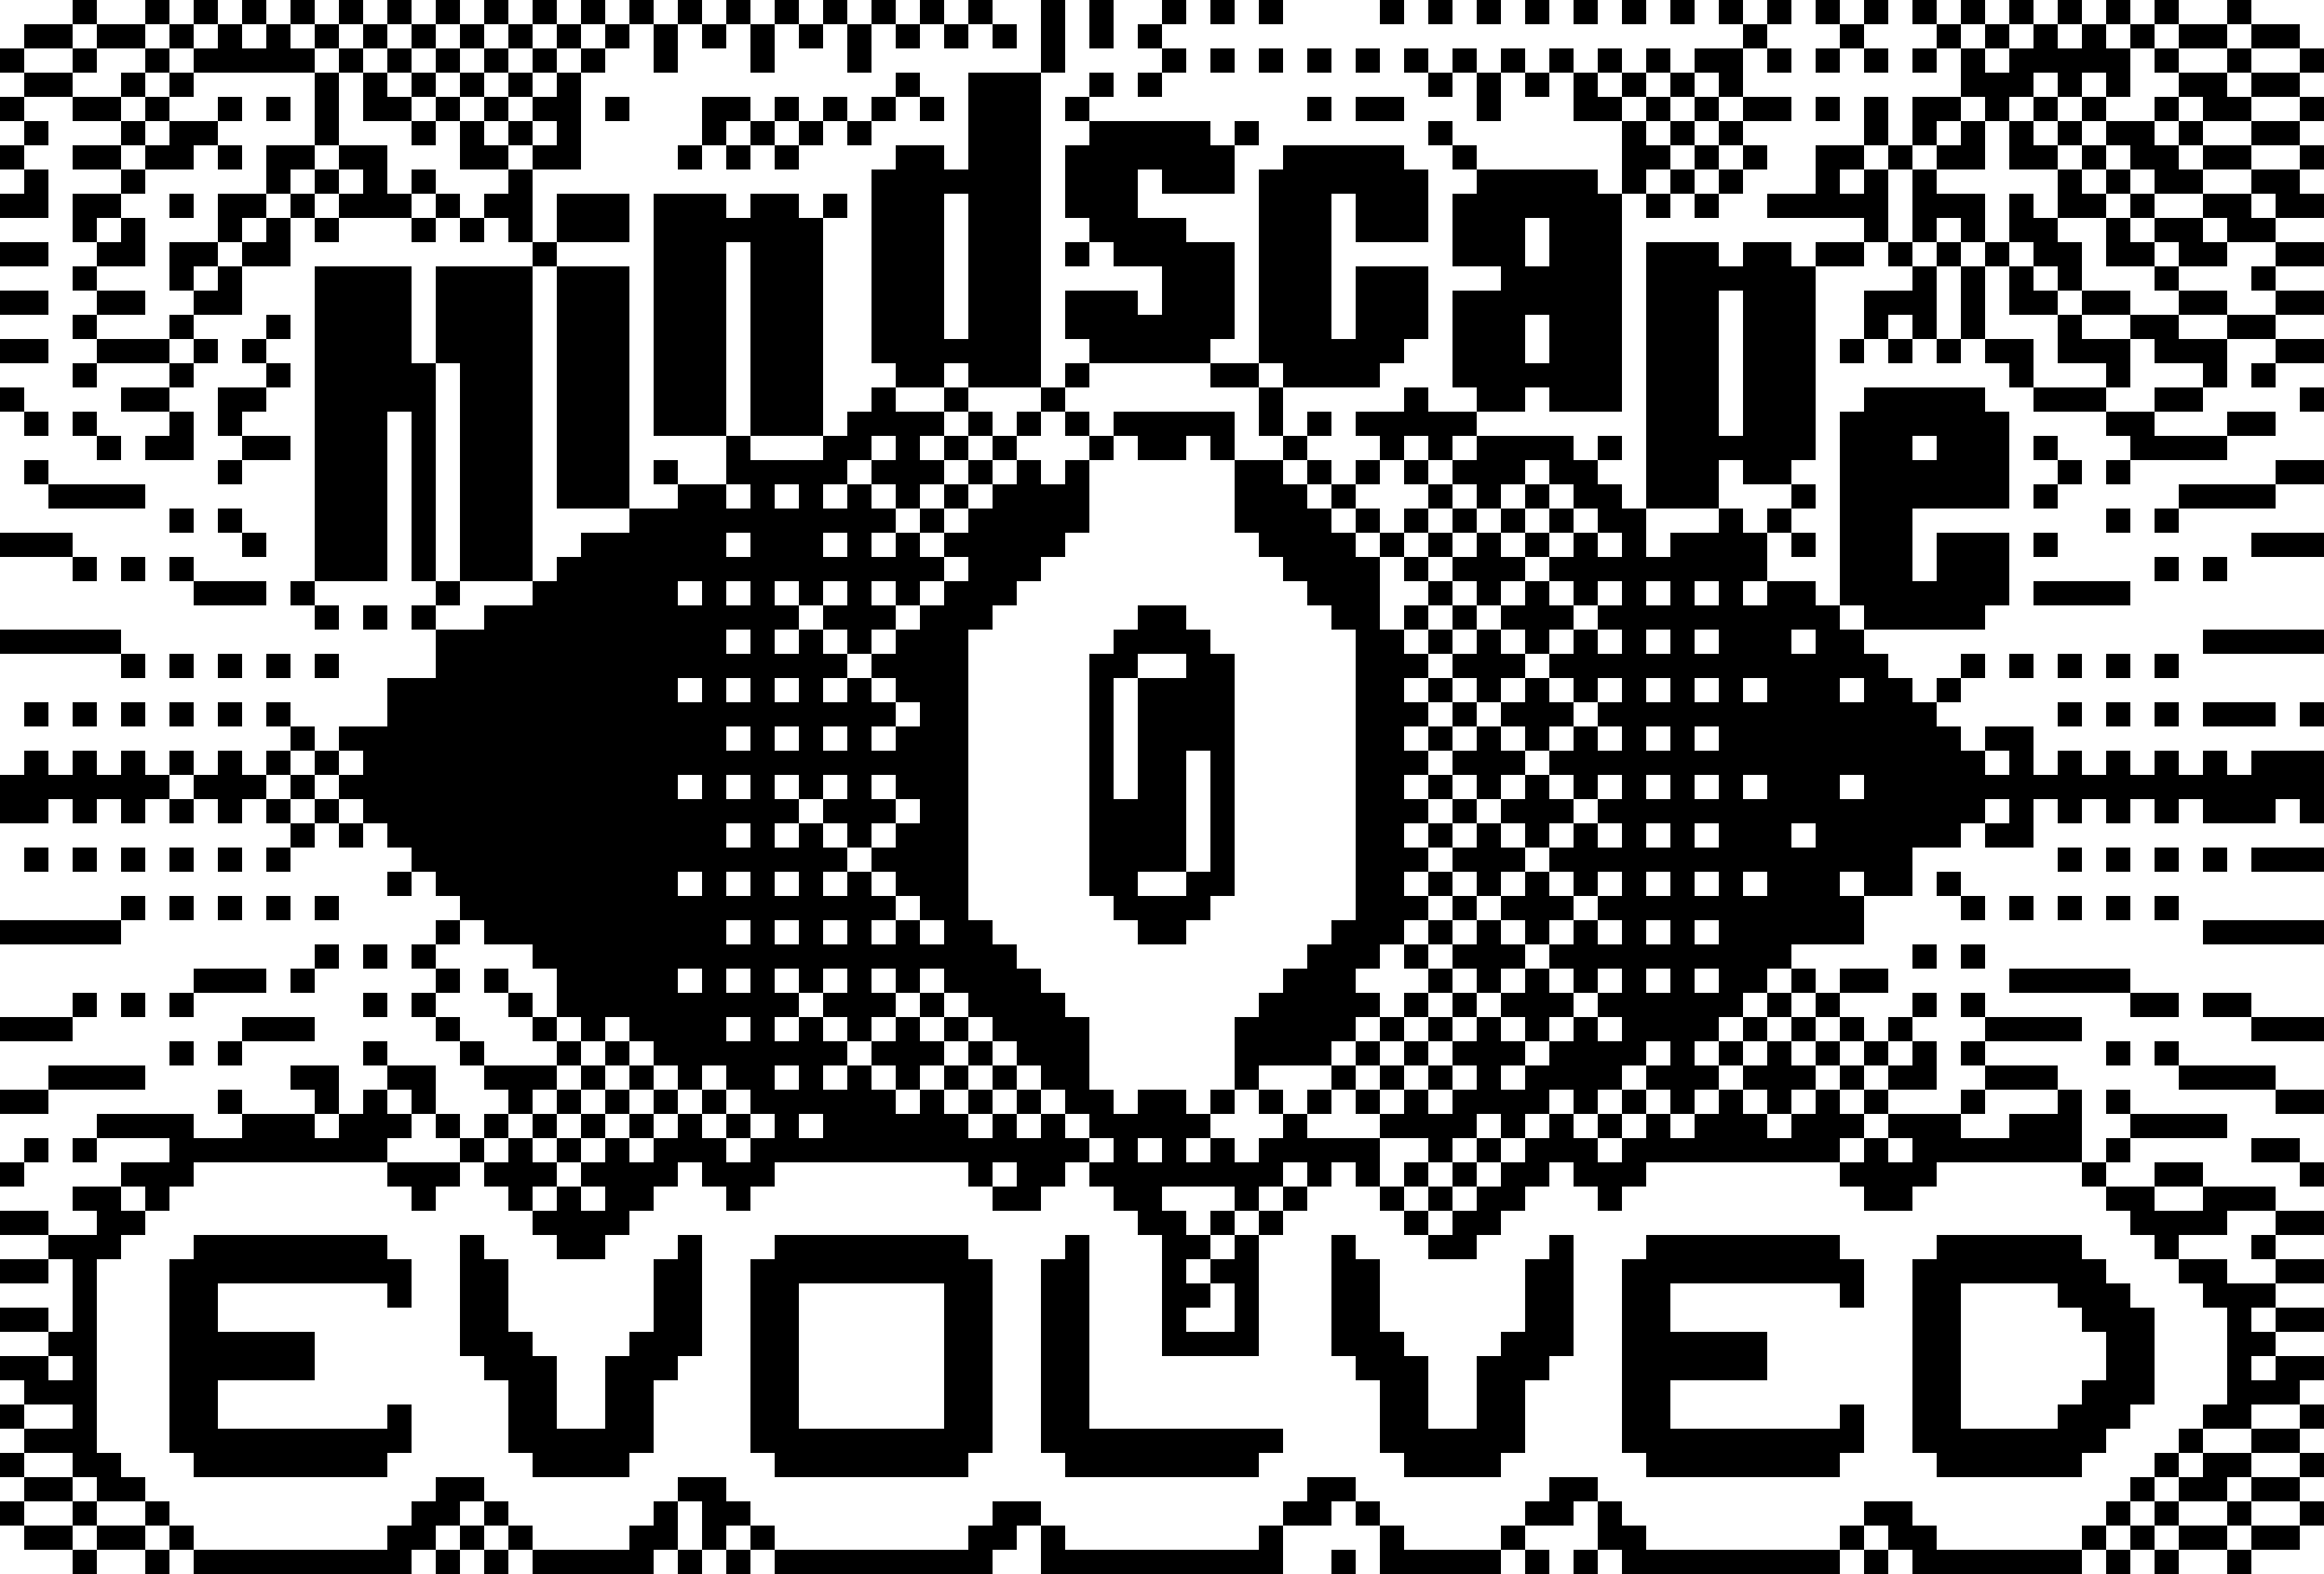 Mindscape Evolved - Nokia Art Jam #2 Submission